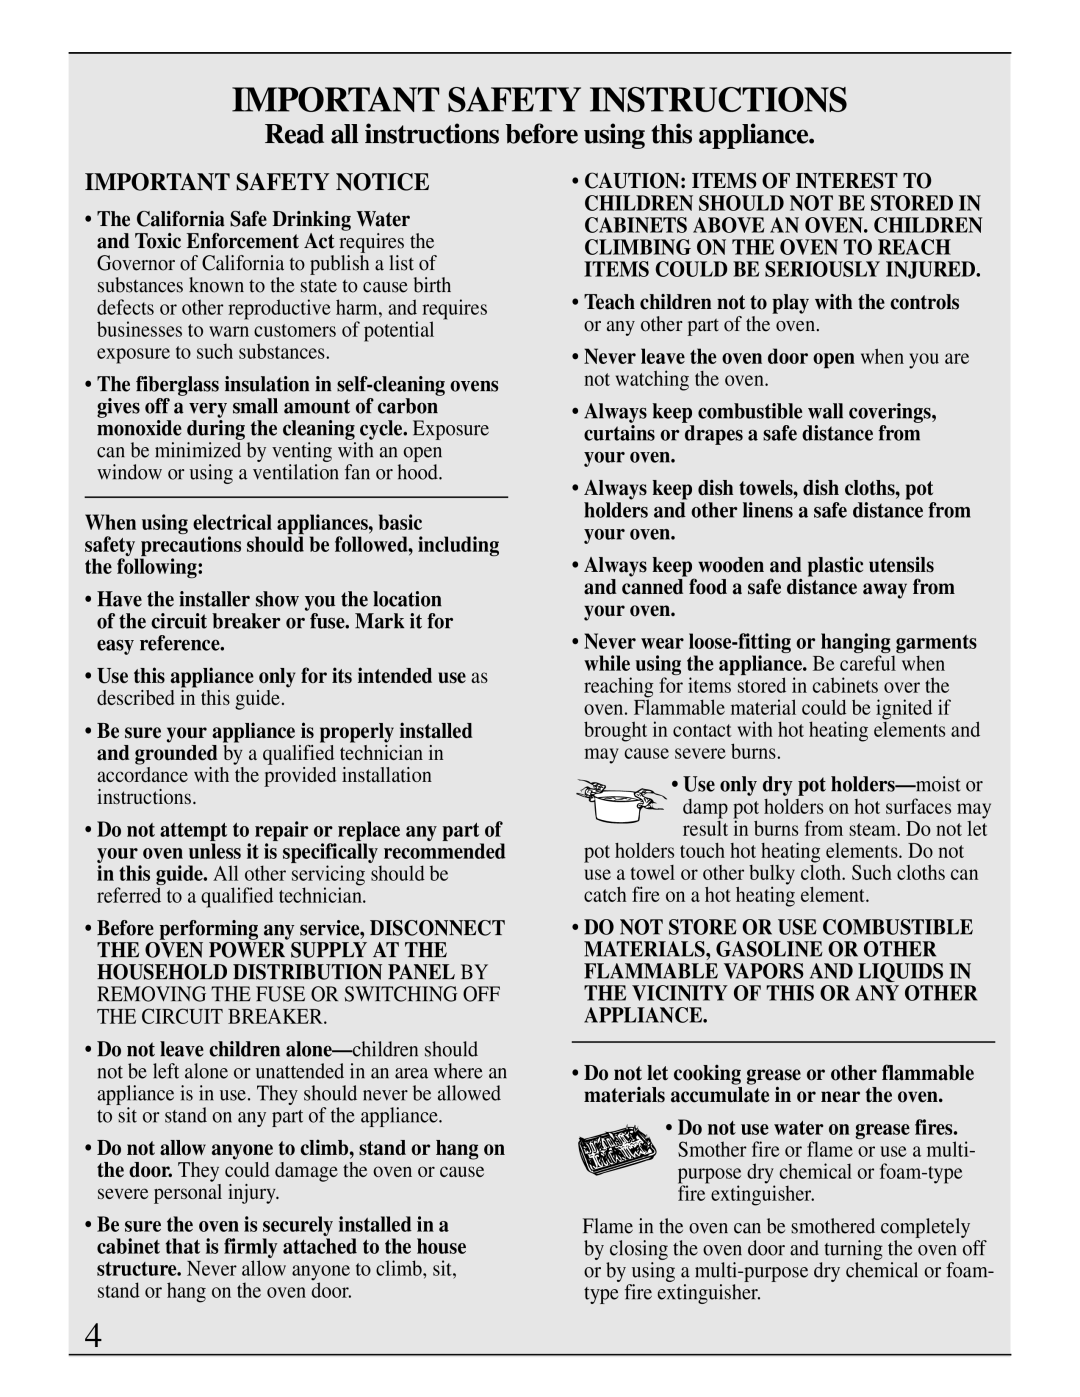 GE Monogram ZEK735 manual Important Safety Instructions, Important Safety Notice 